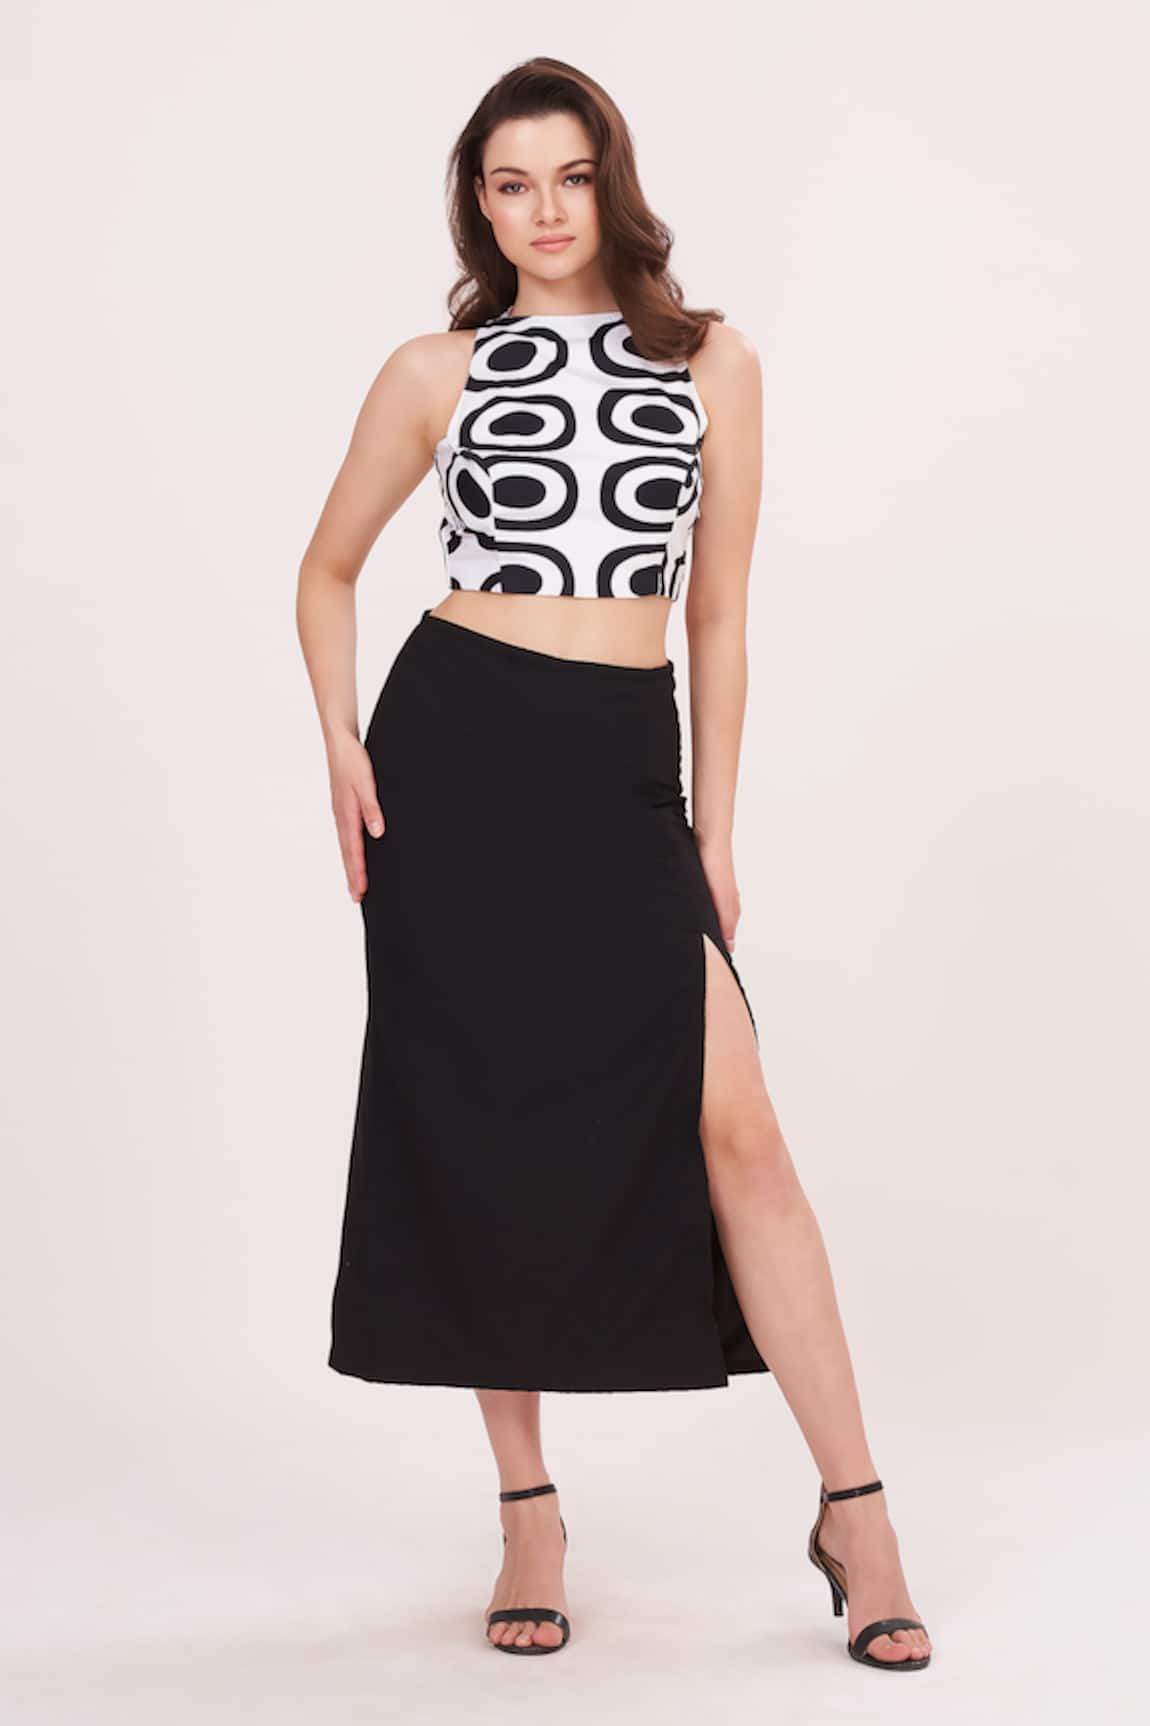 House of Varada Printed Top & Front-Slit Skirt Set